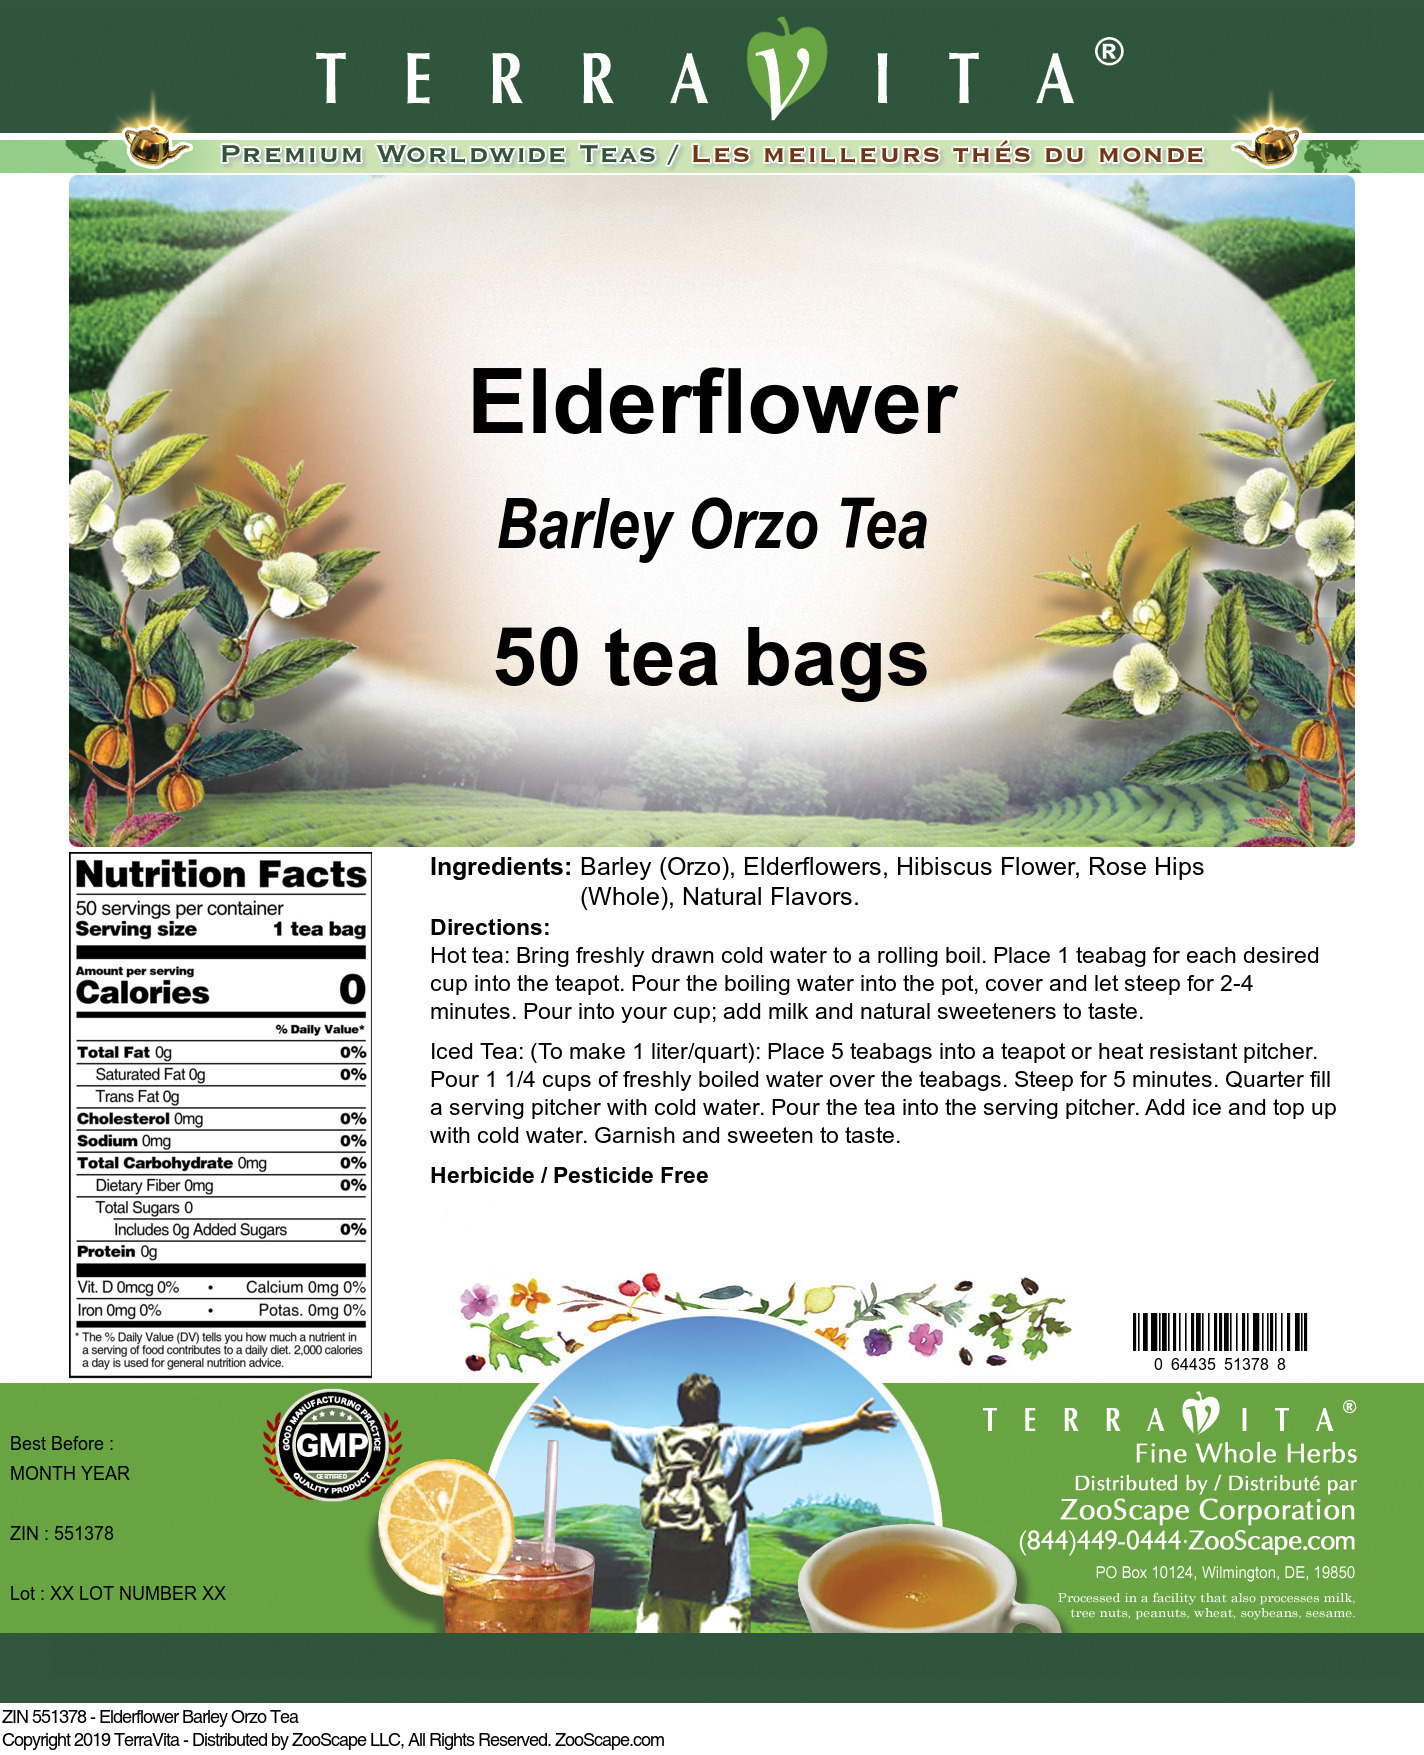 Elderflower Barley Orzo Tea - Label